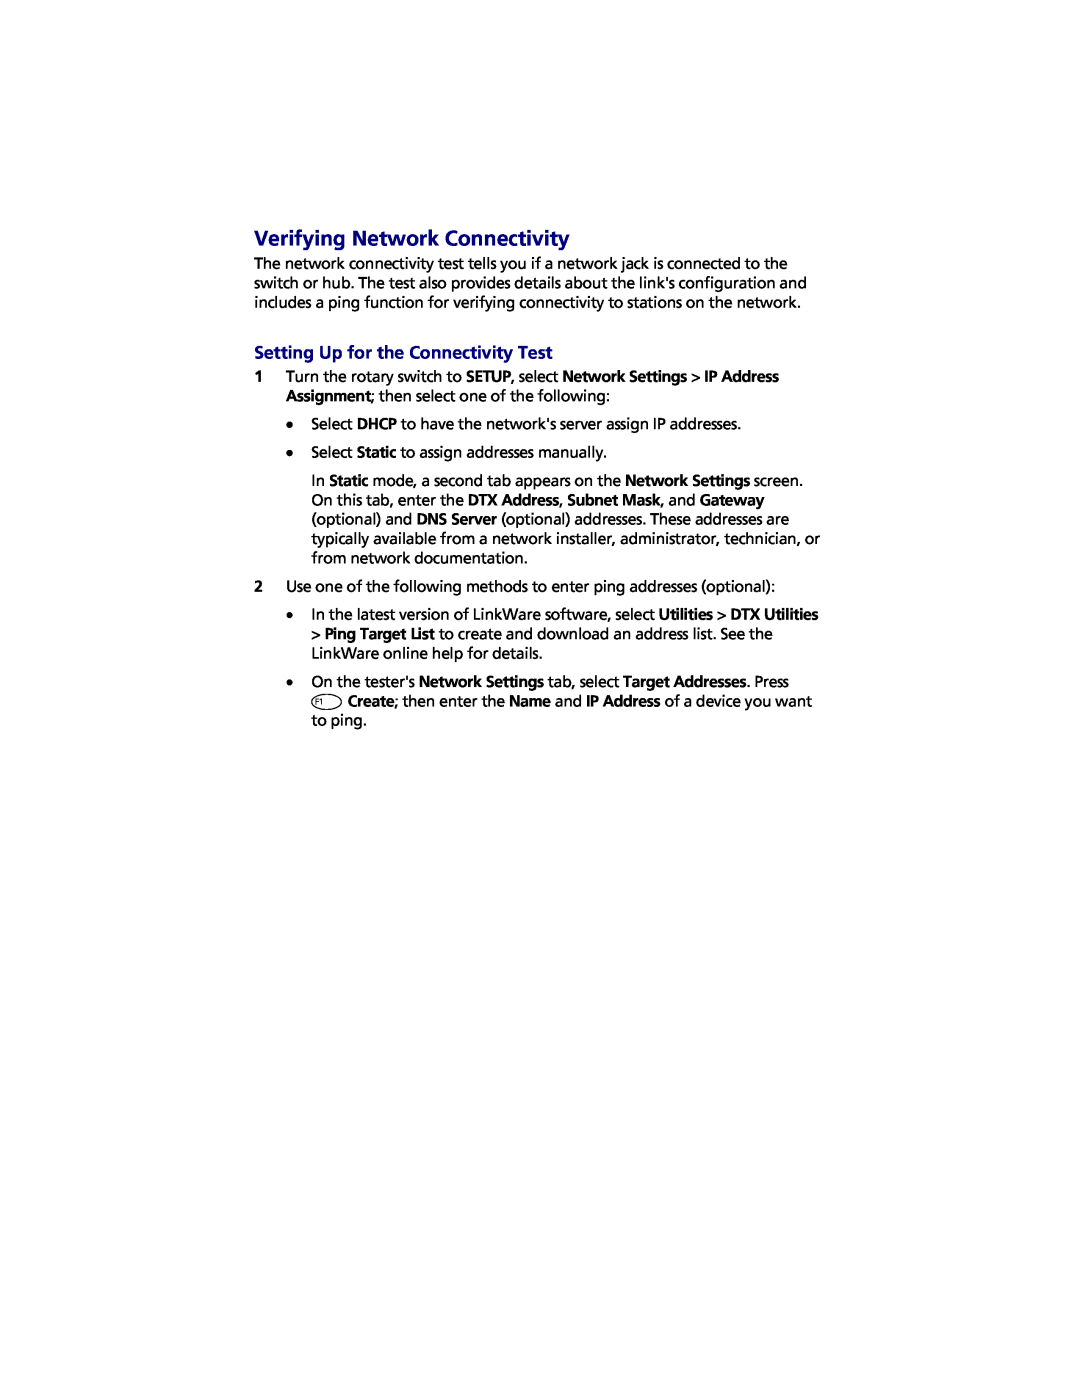 Fluke DTX-NSM instruction sheet Verifying Network Connectivity, Setting Up for the Connectivity Test 